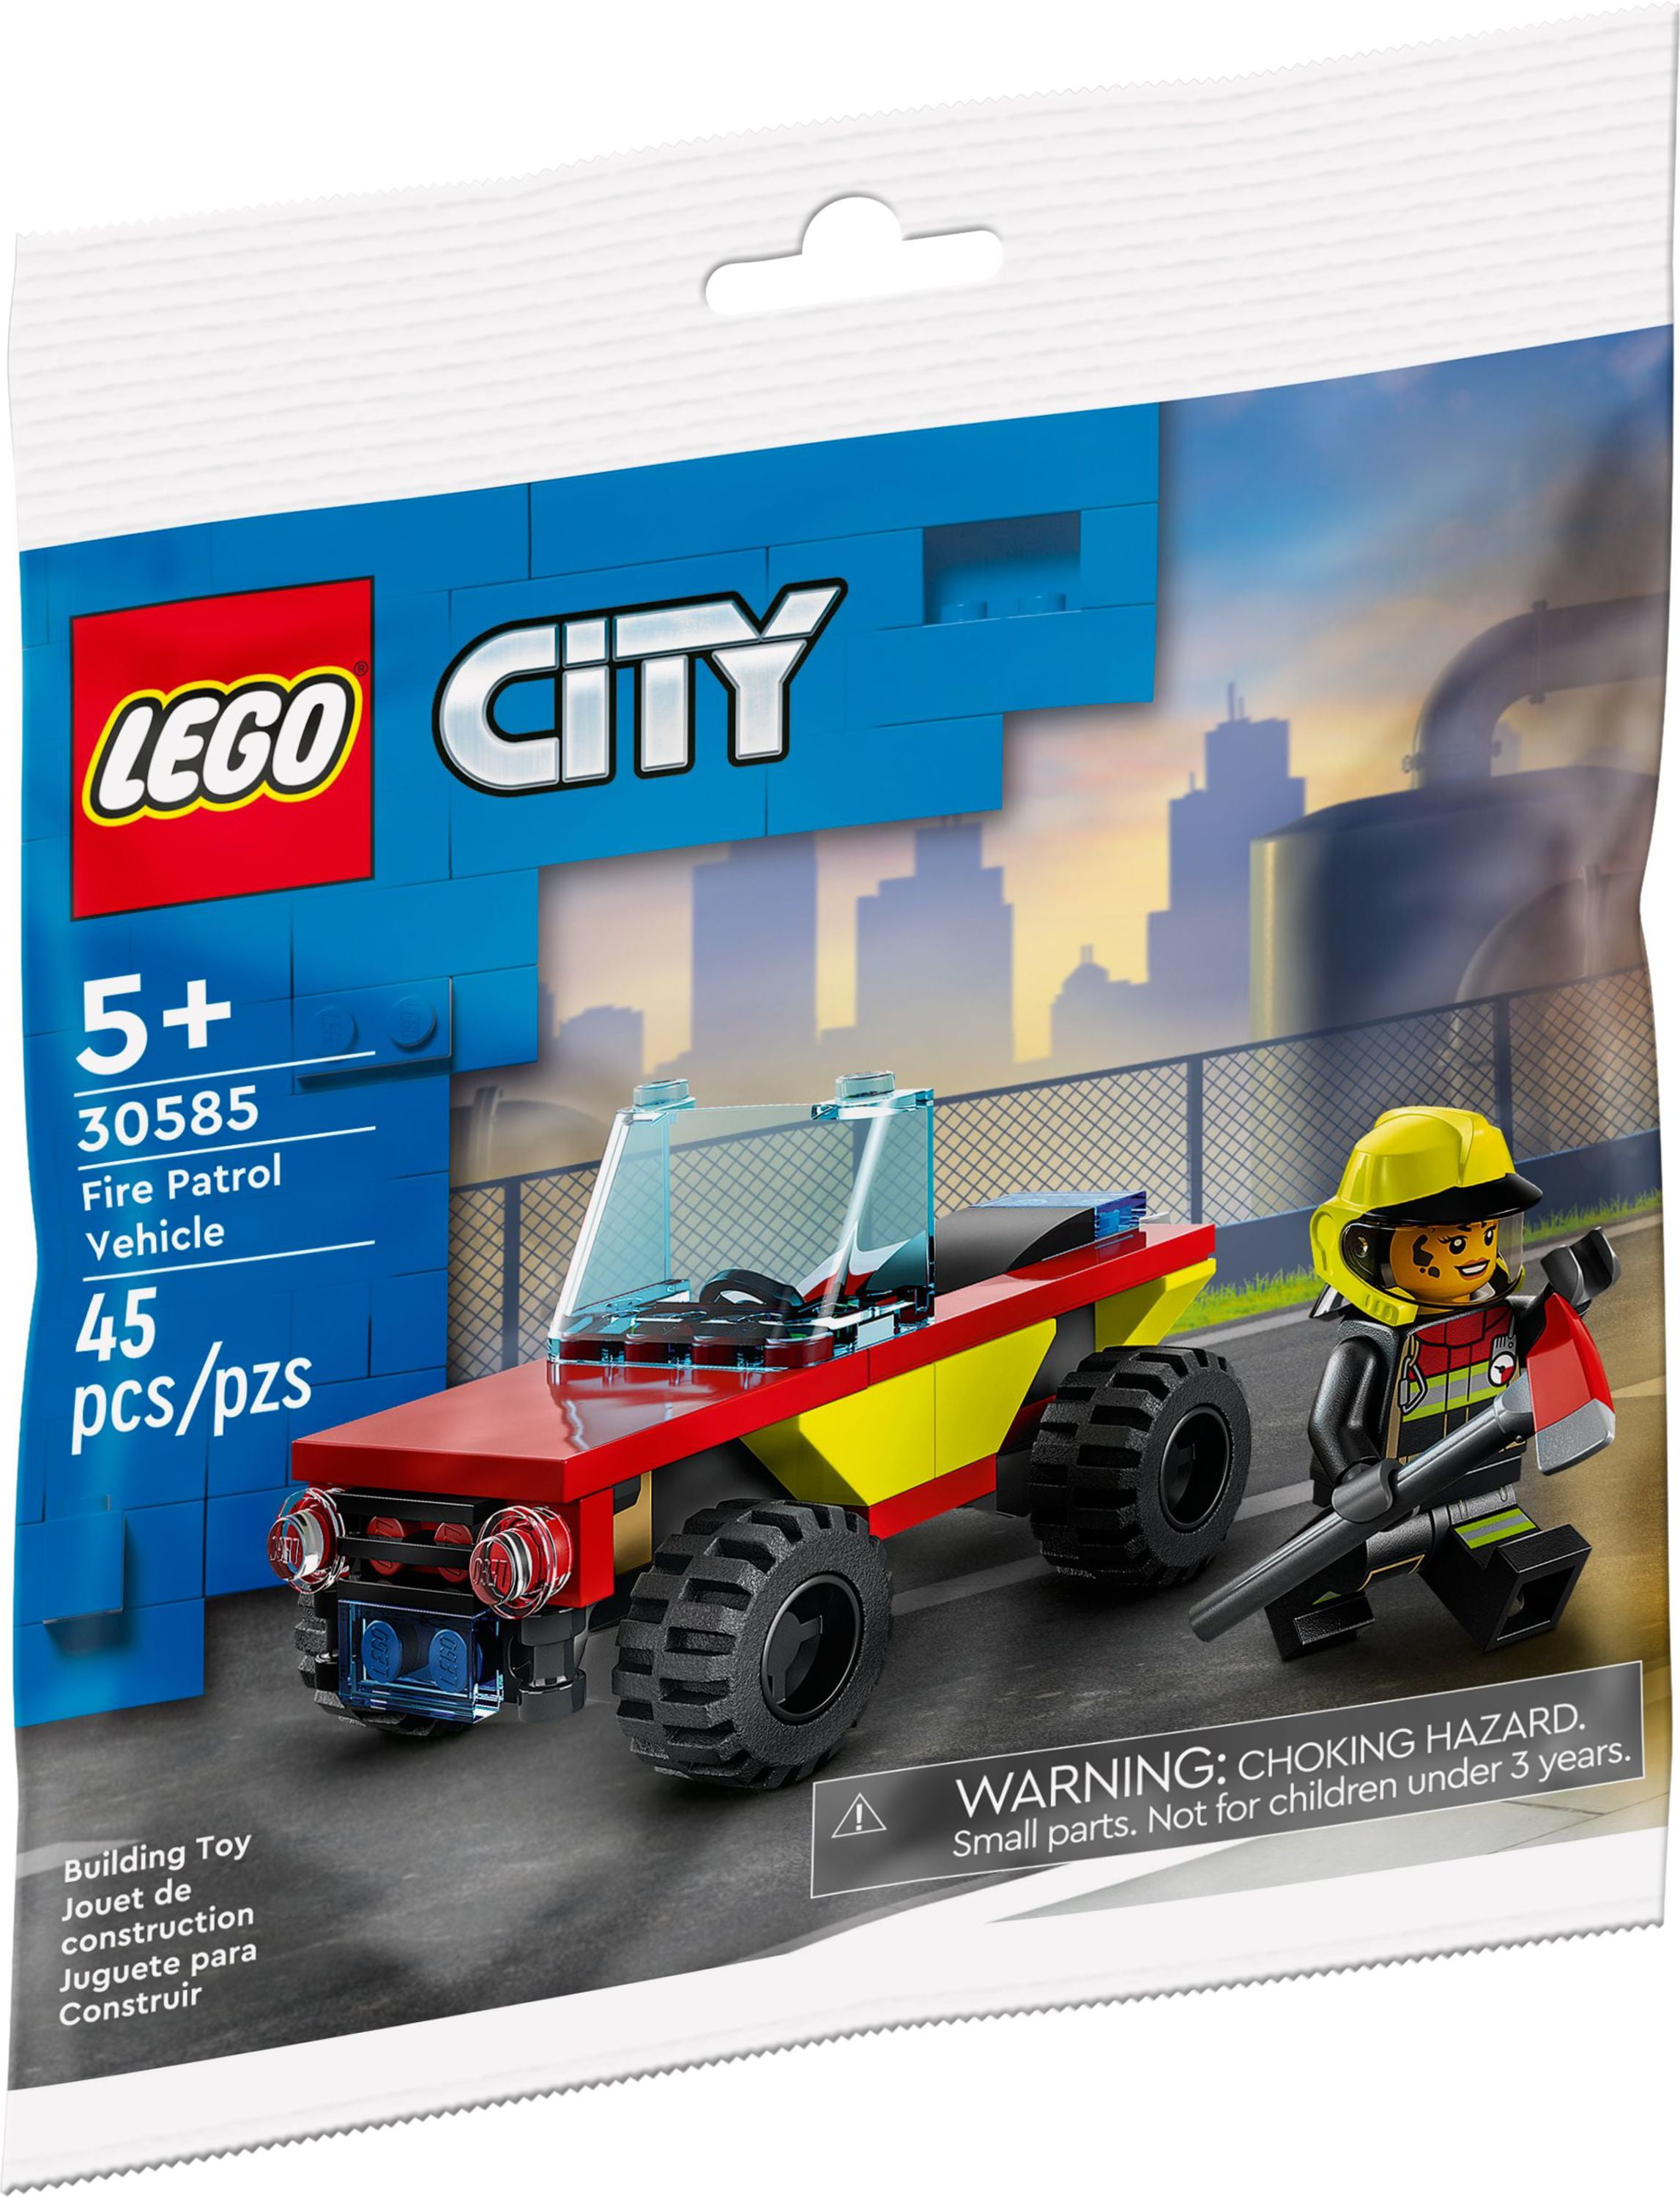 LEGO City Fire Patrol Vehicle 30585 - Walmart.com